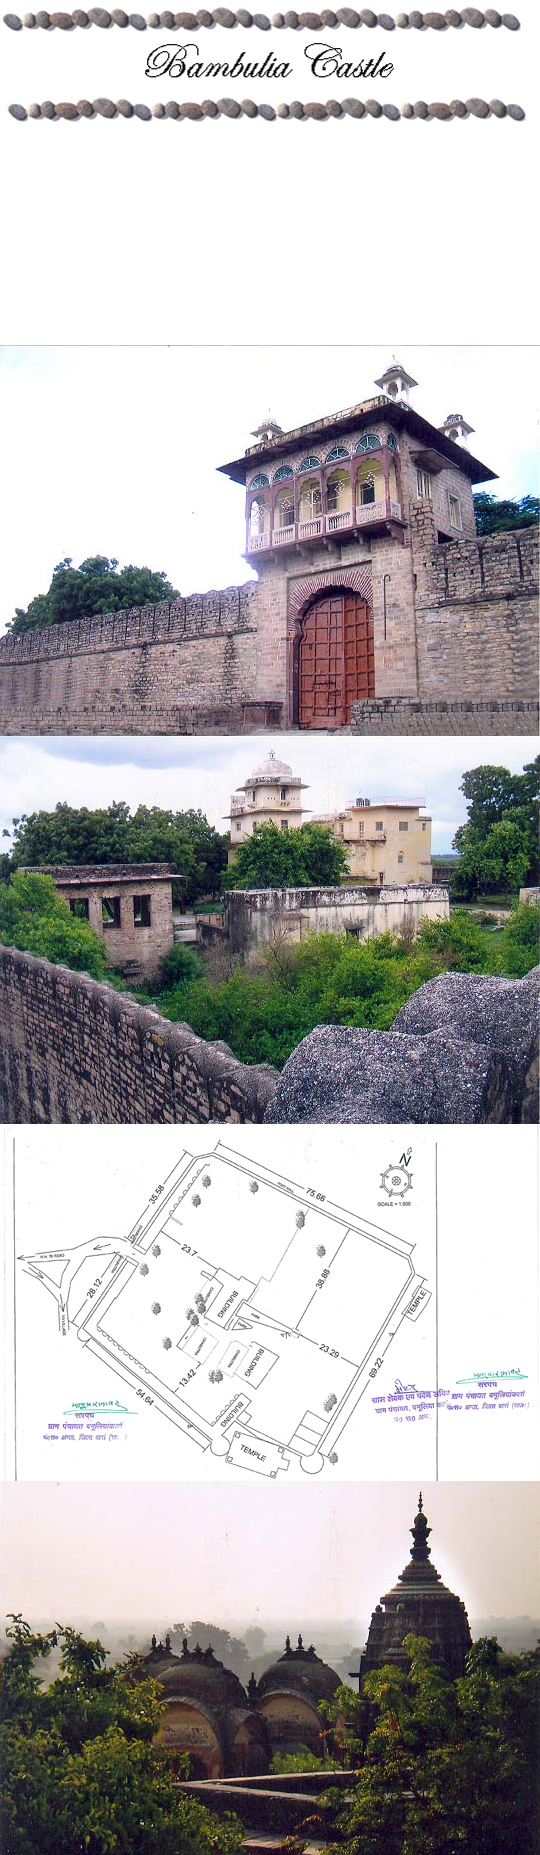 Images of Bambulia Castle